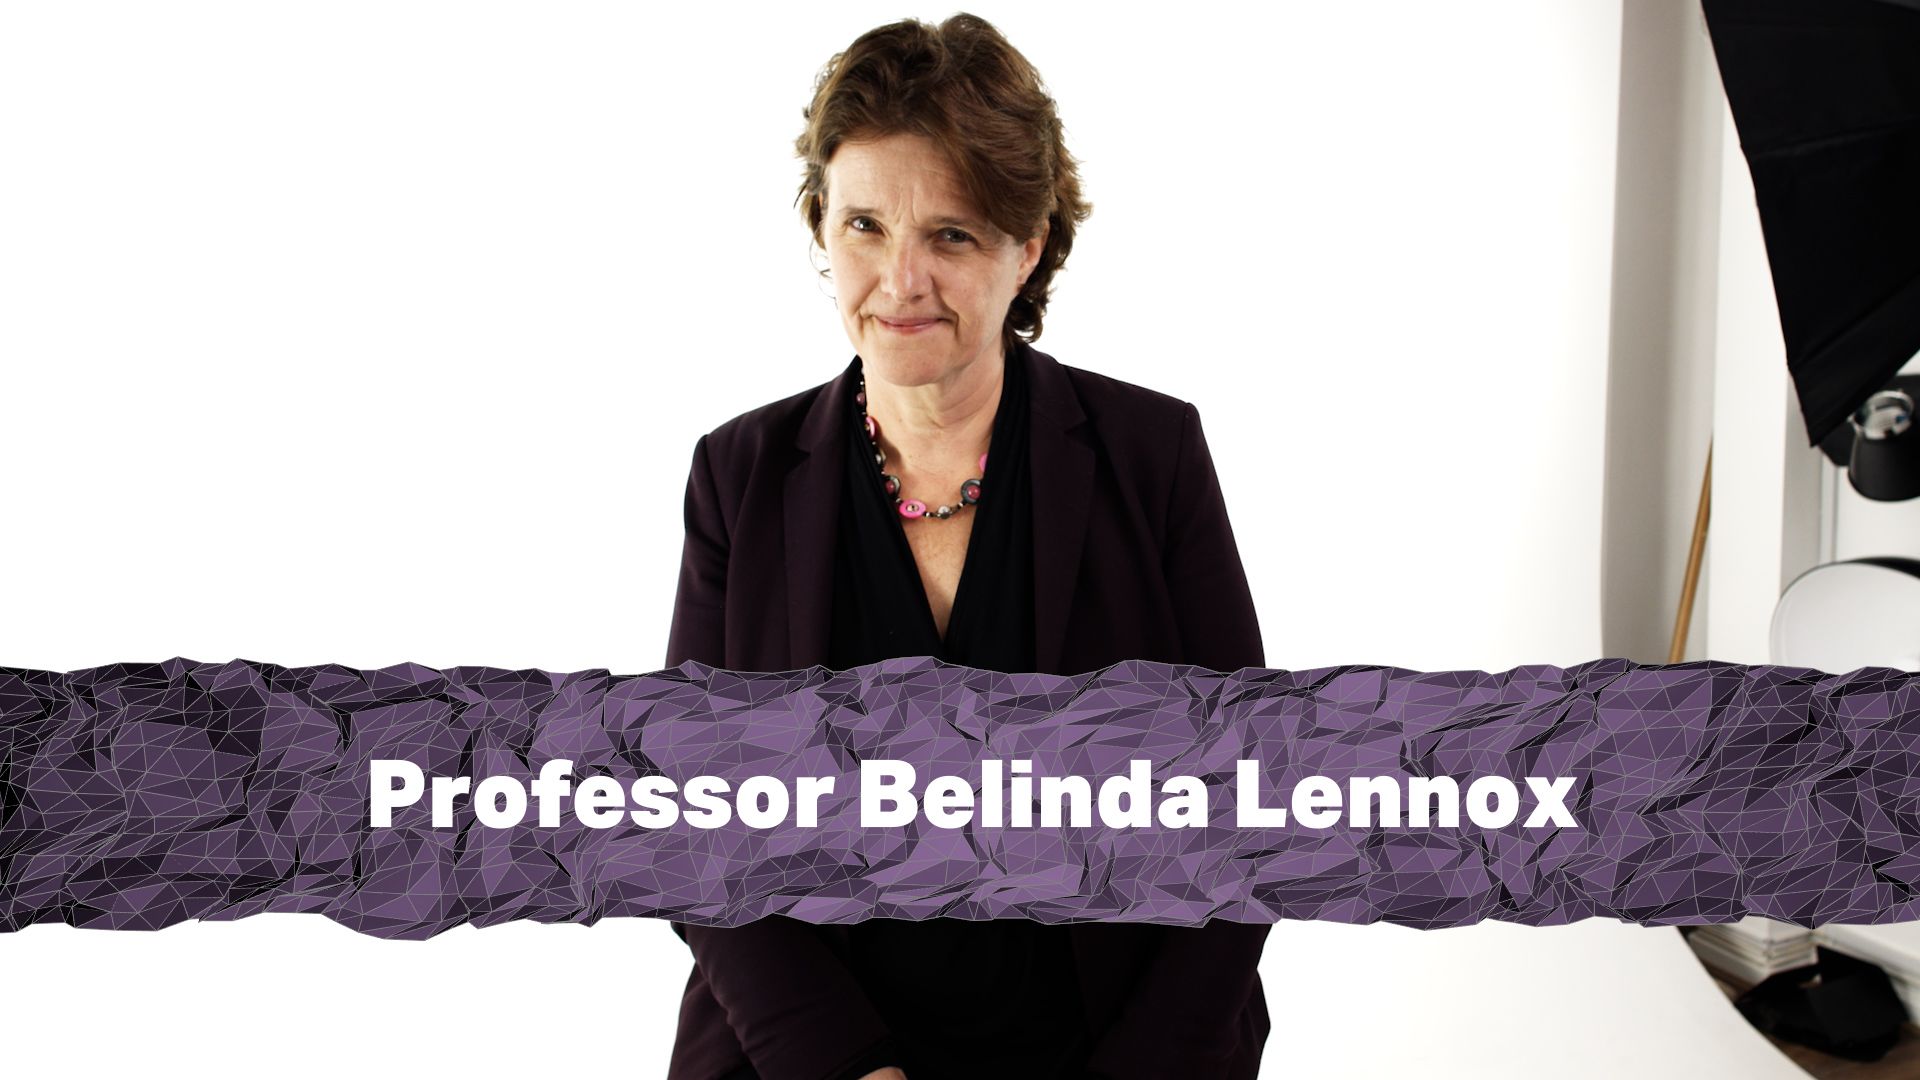 Belinda Lennox - Shedding light on the complexities of mental illness